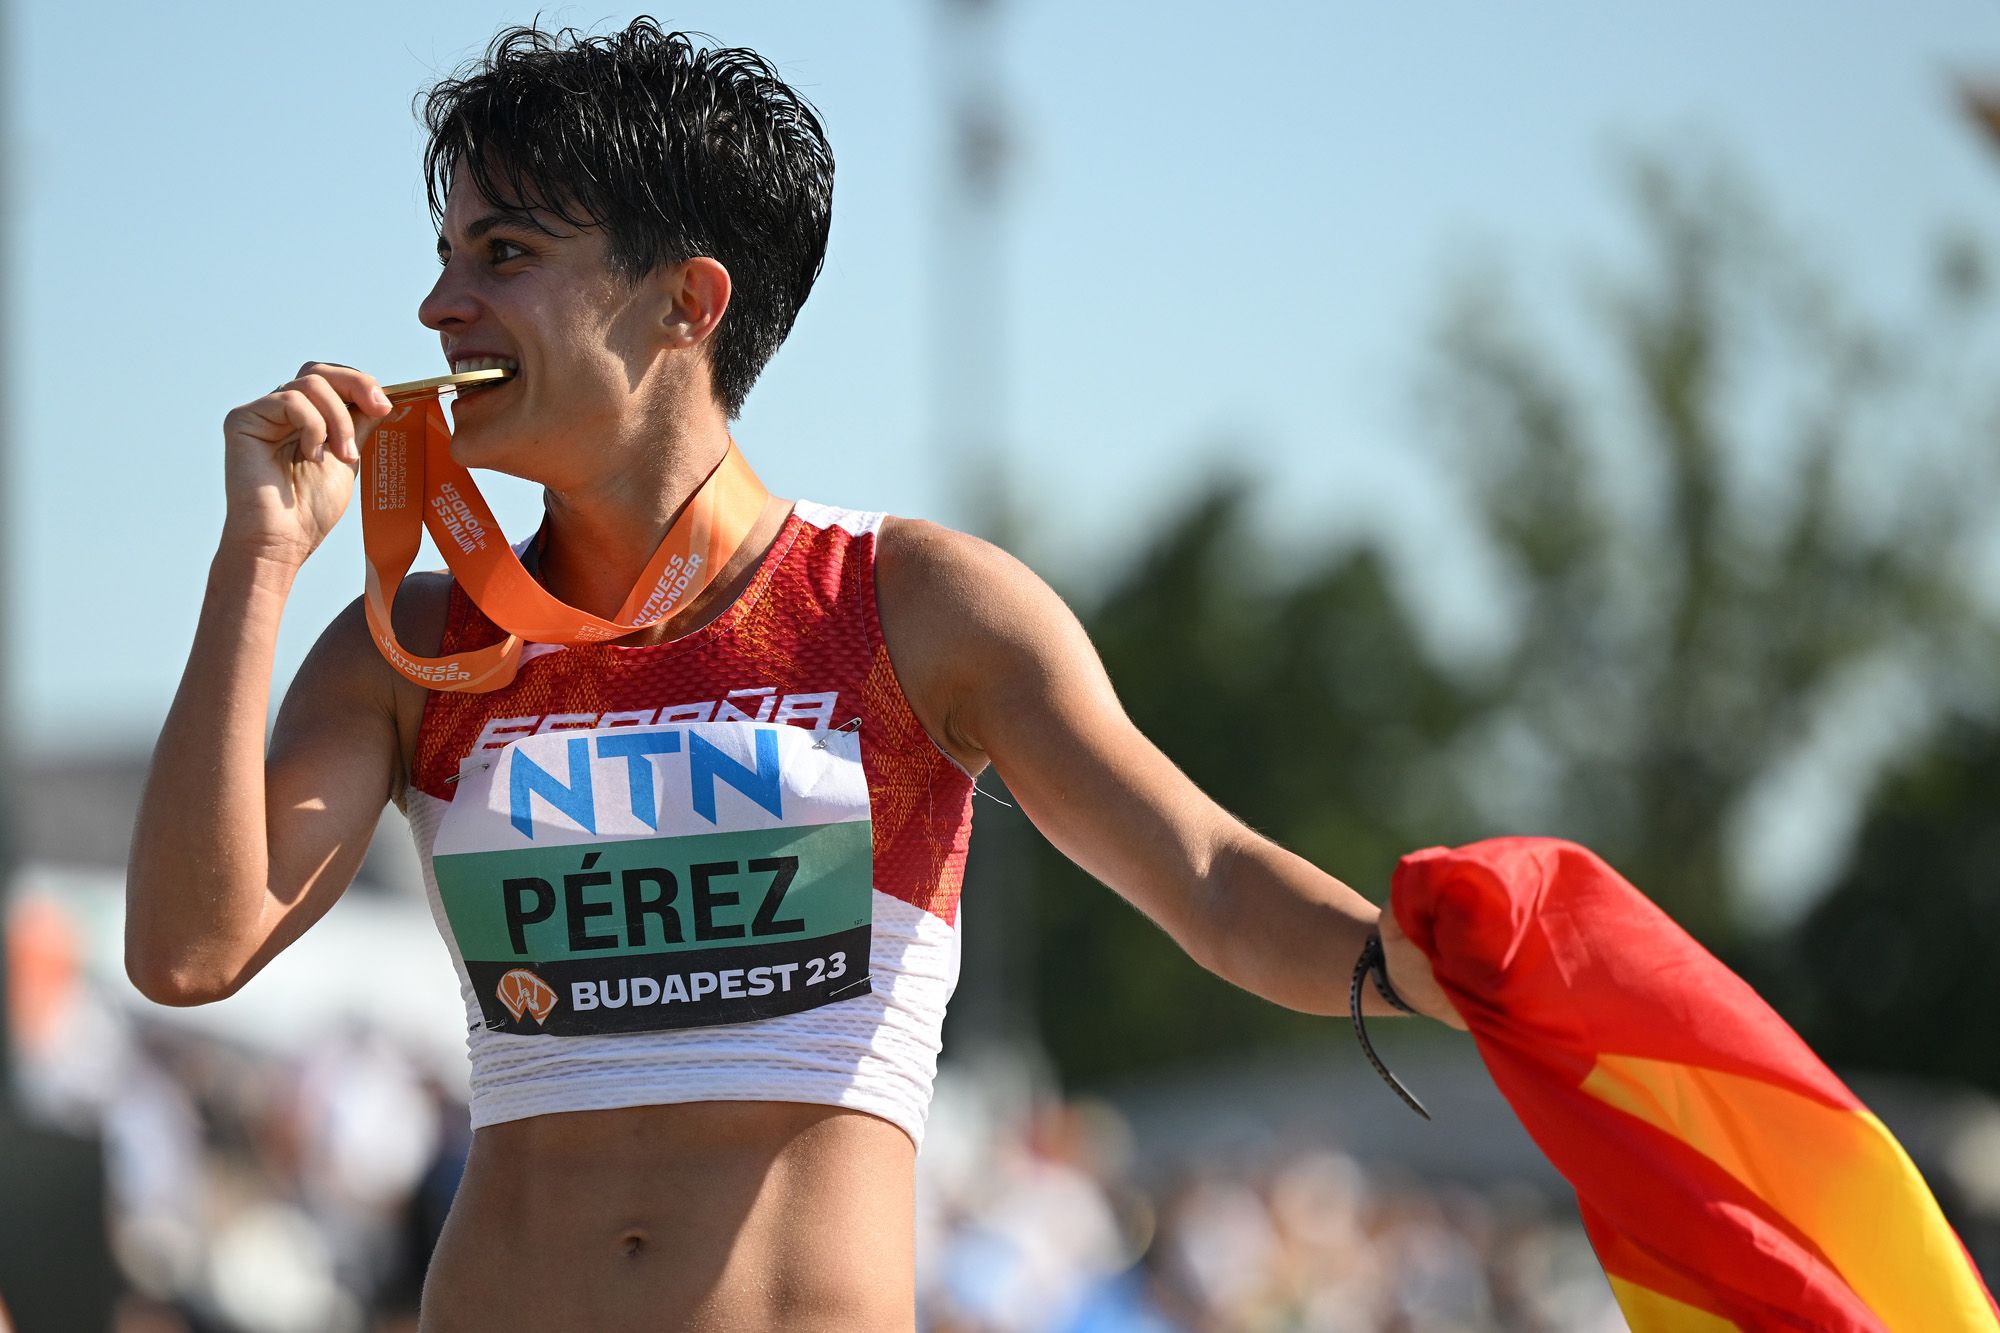 Maria Perez after winning the 35km race walk at the World Athletics Championships Budapest 23